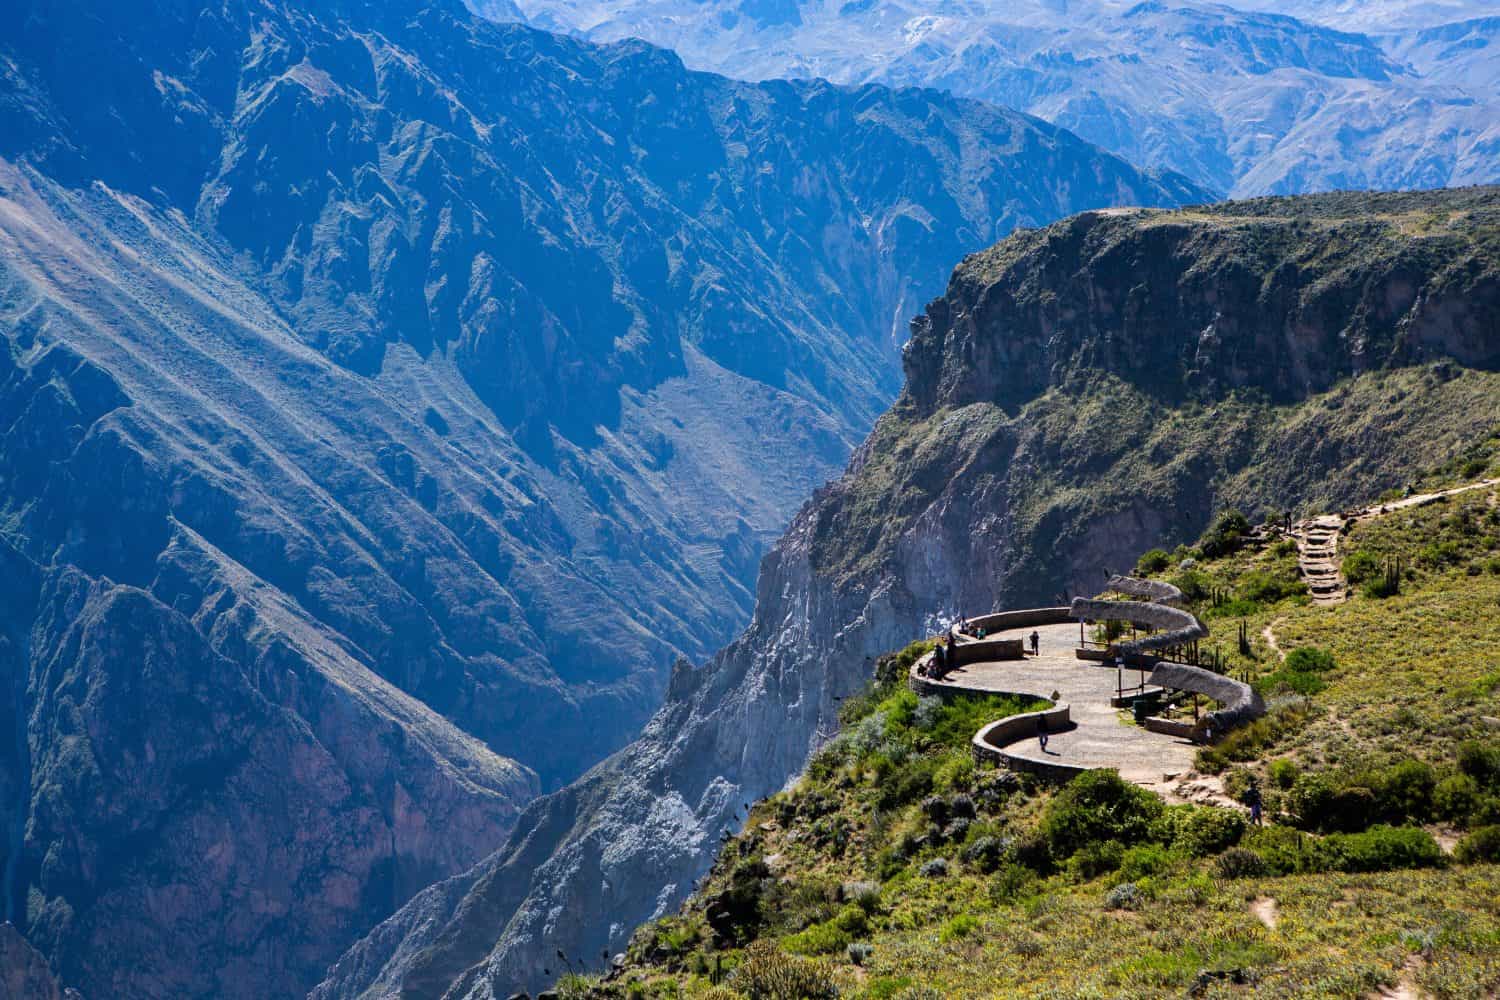 View of Colca Canyon in Peru